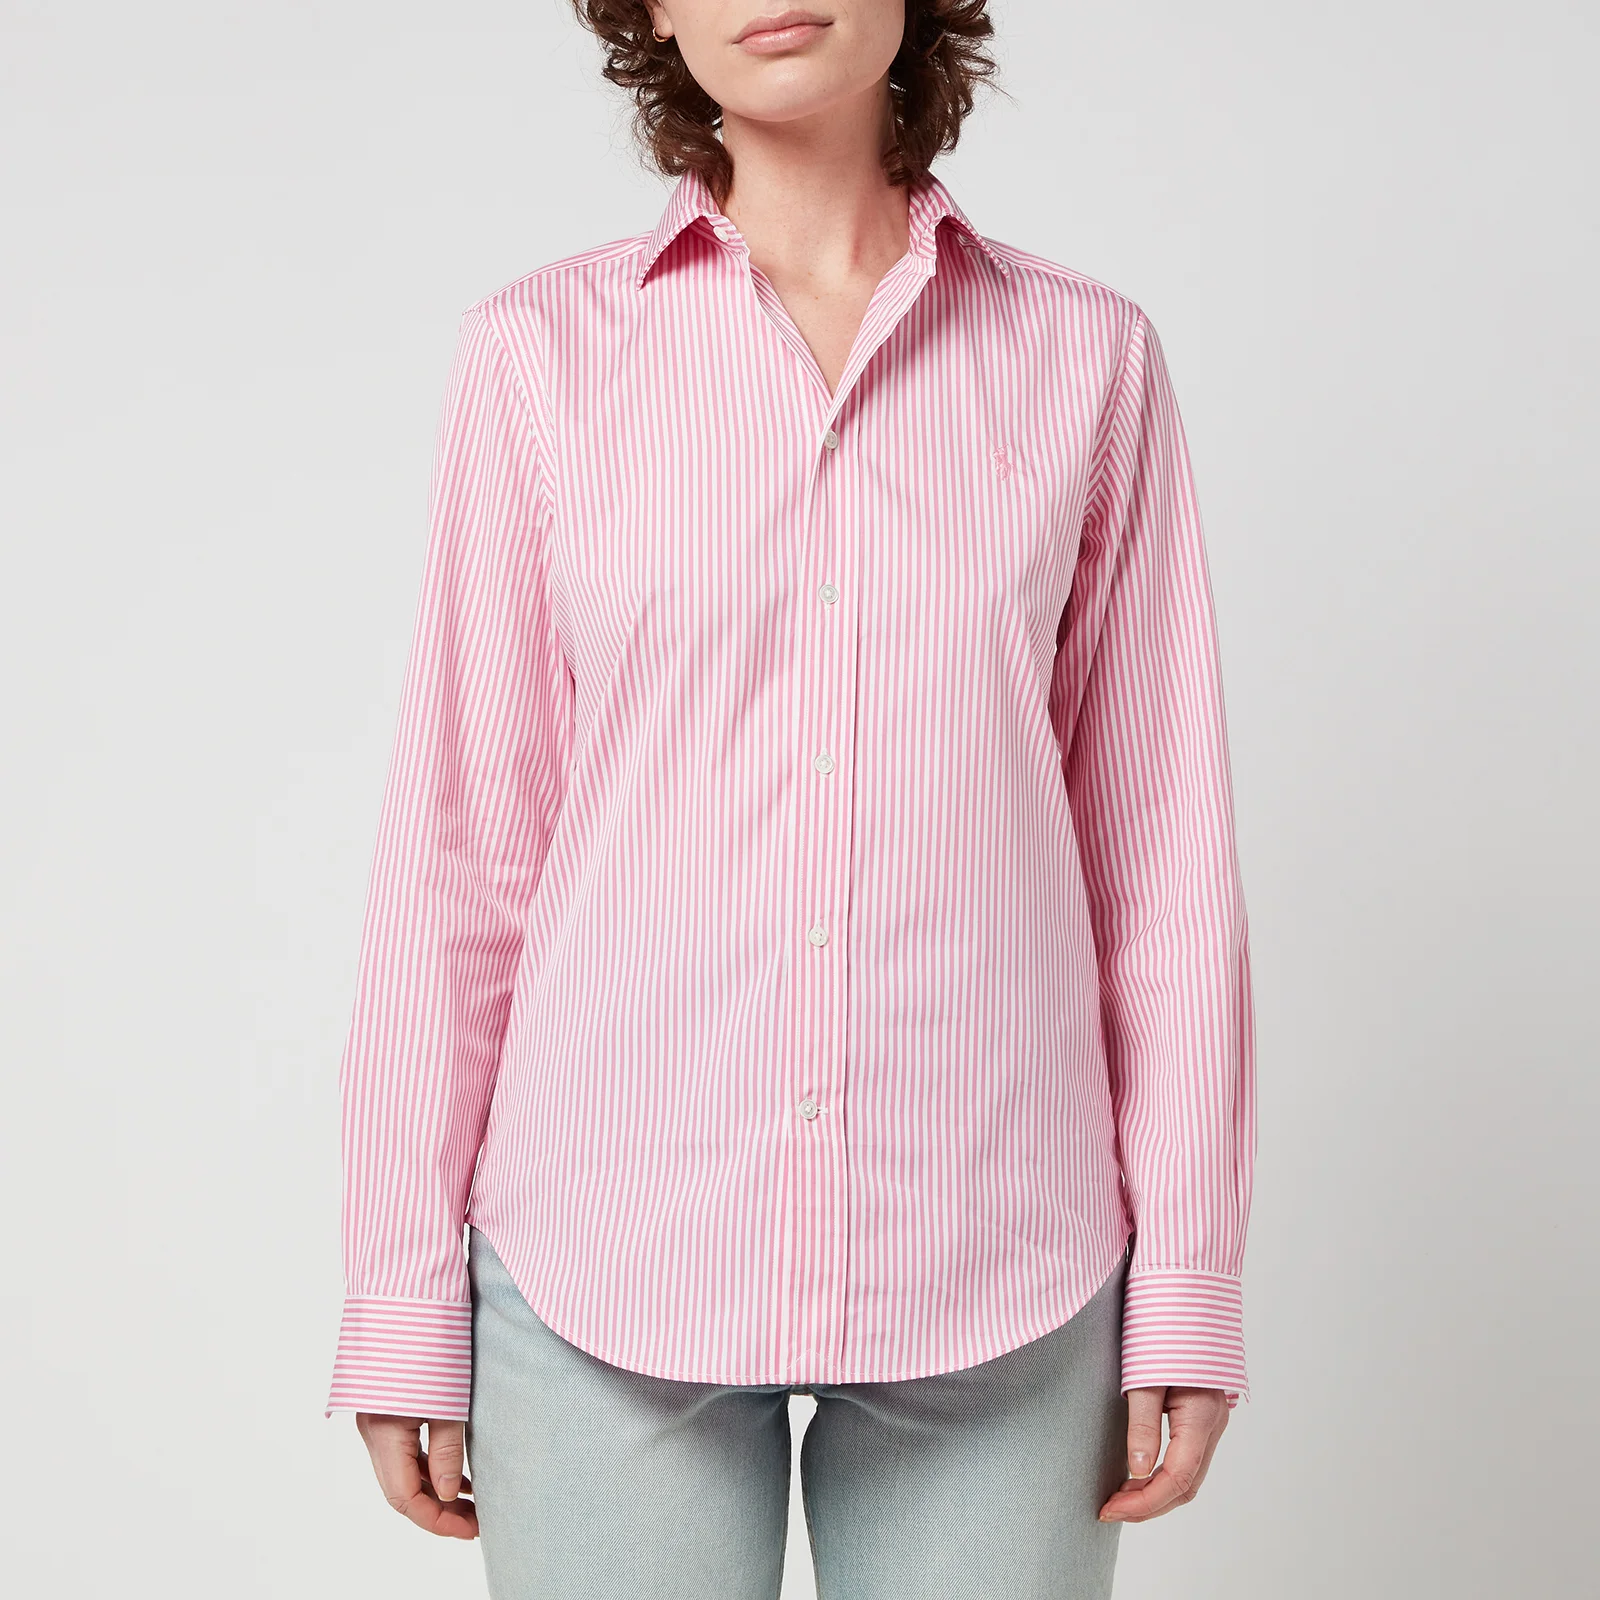 Polo Ralph Lauren Women's Est Georgia Long Sleeve Shirt - 759 Beach Pink/White Image 1